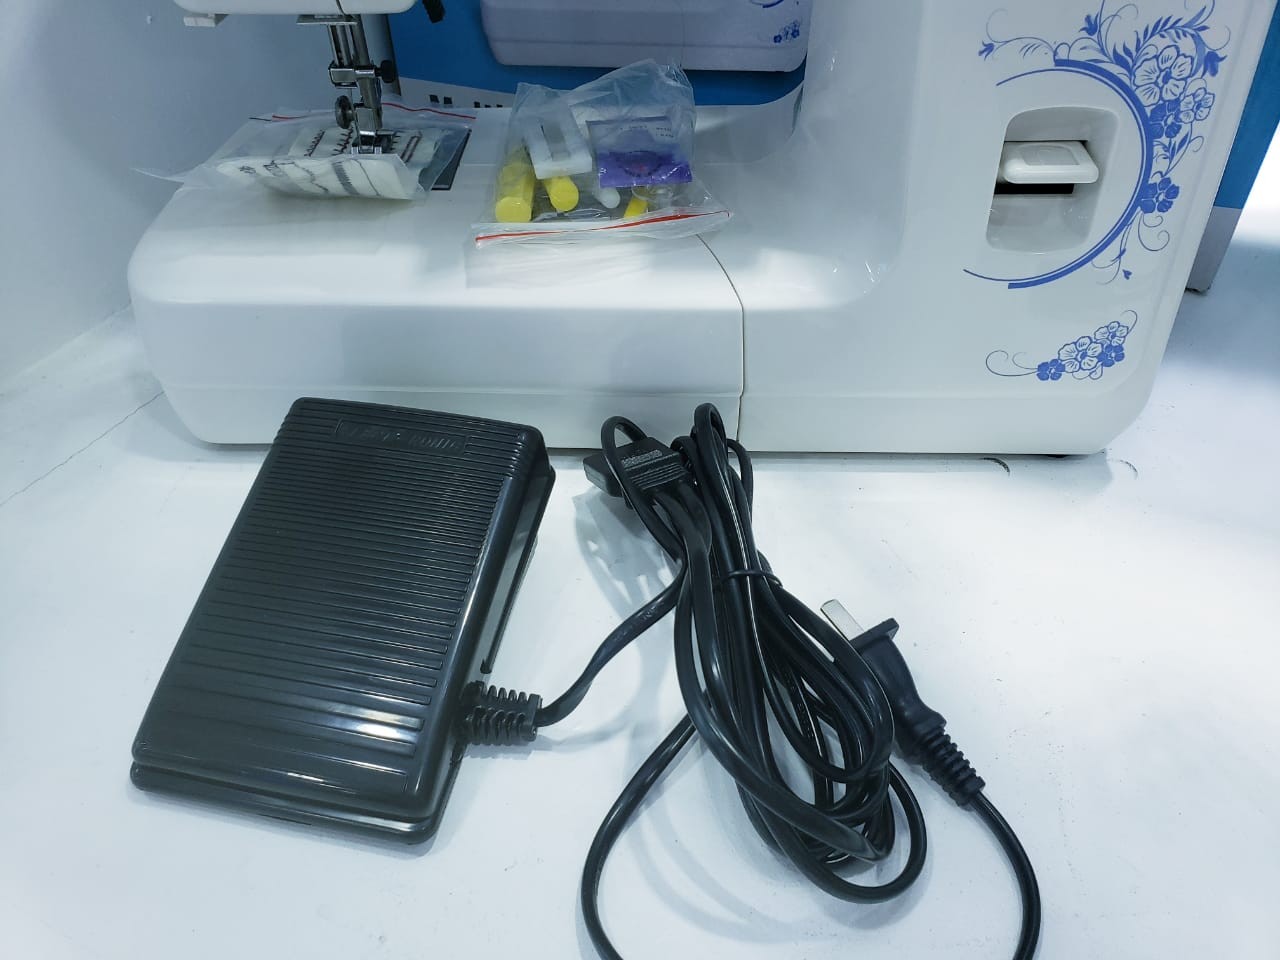 equipos profesionales - Maquina de coser Electrica multifuncional profesional JUKKY FH6224 6